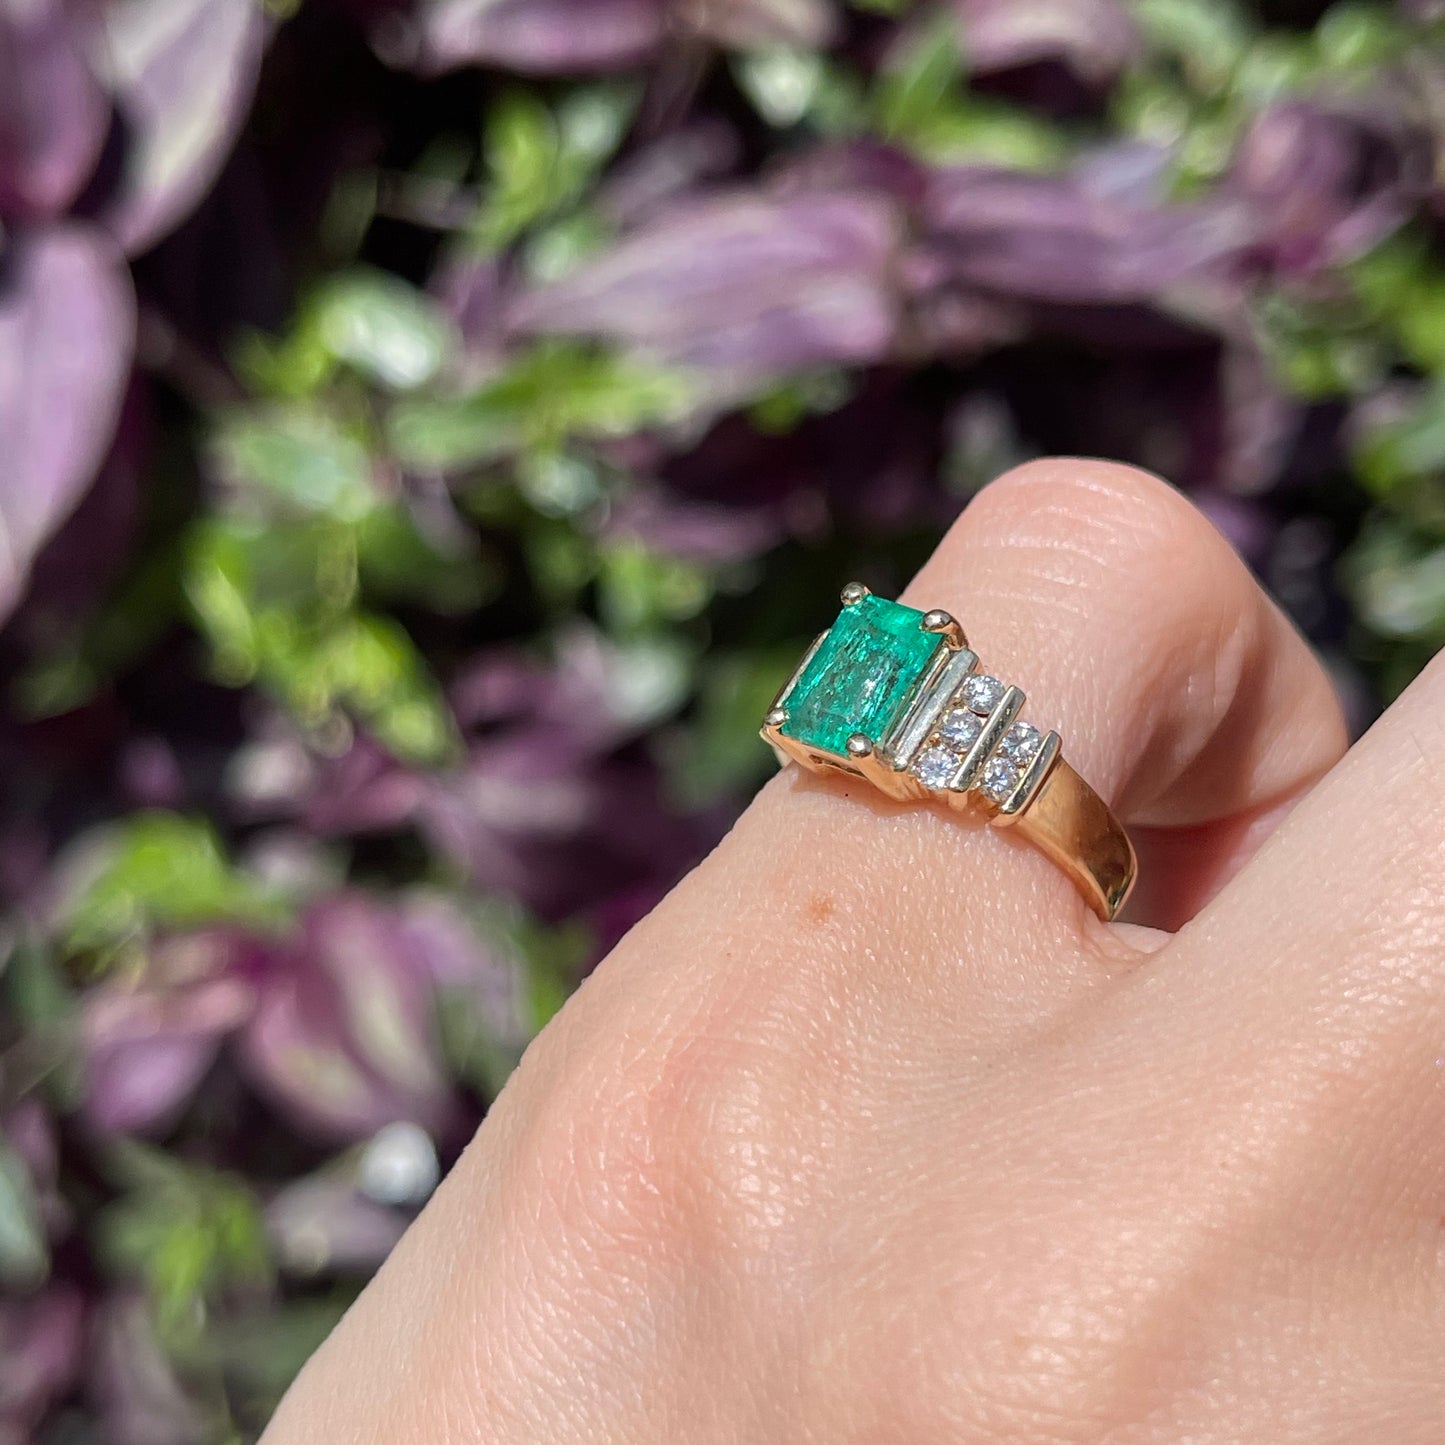 Estate 14KT Yellow Gold Emerald-Cut Lab Emerald + Double Row Diamond Ring